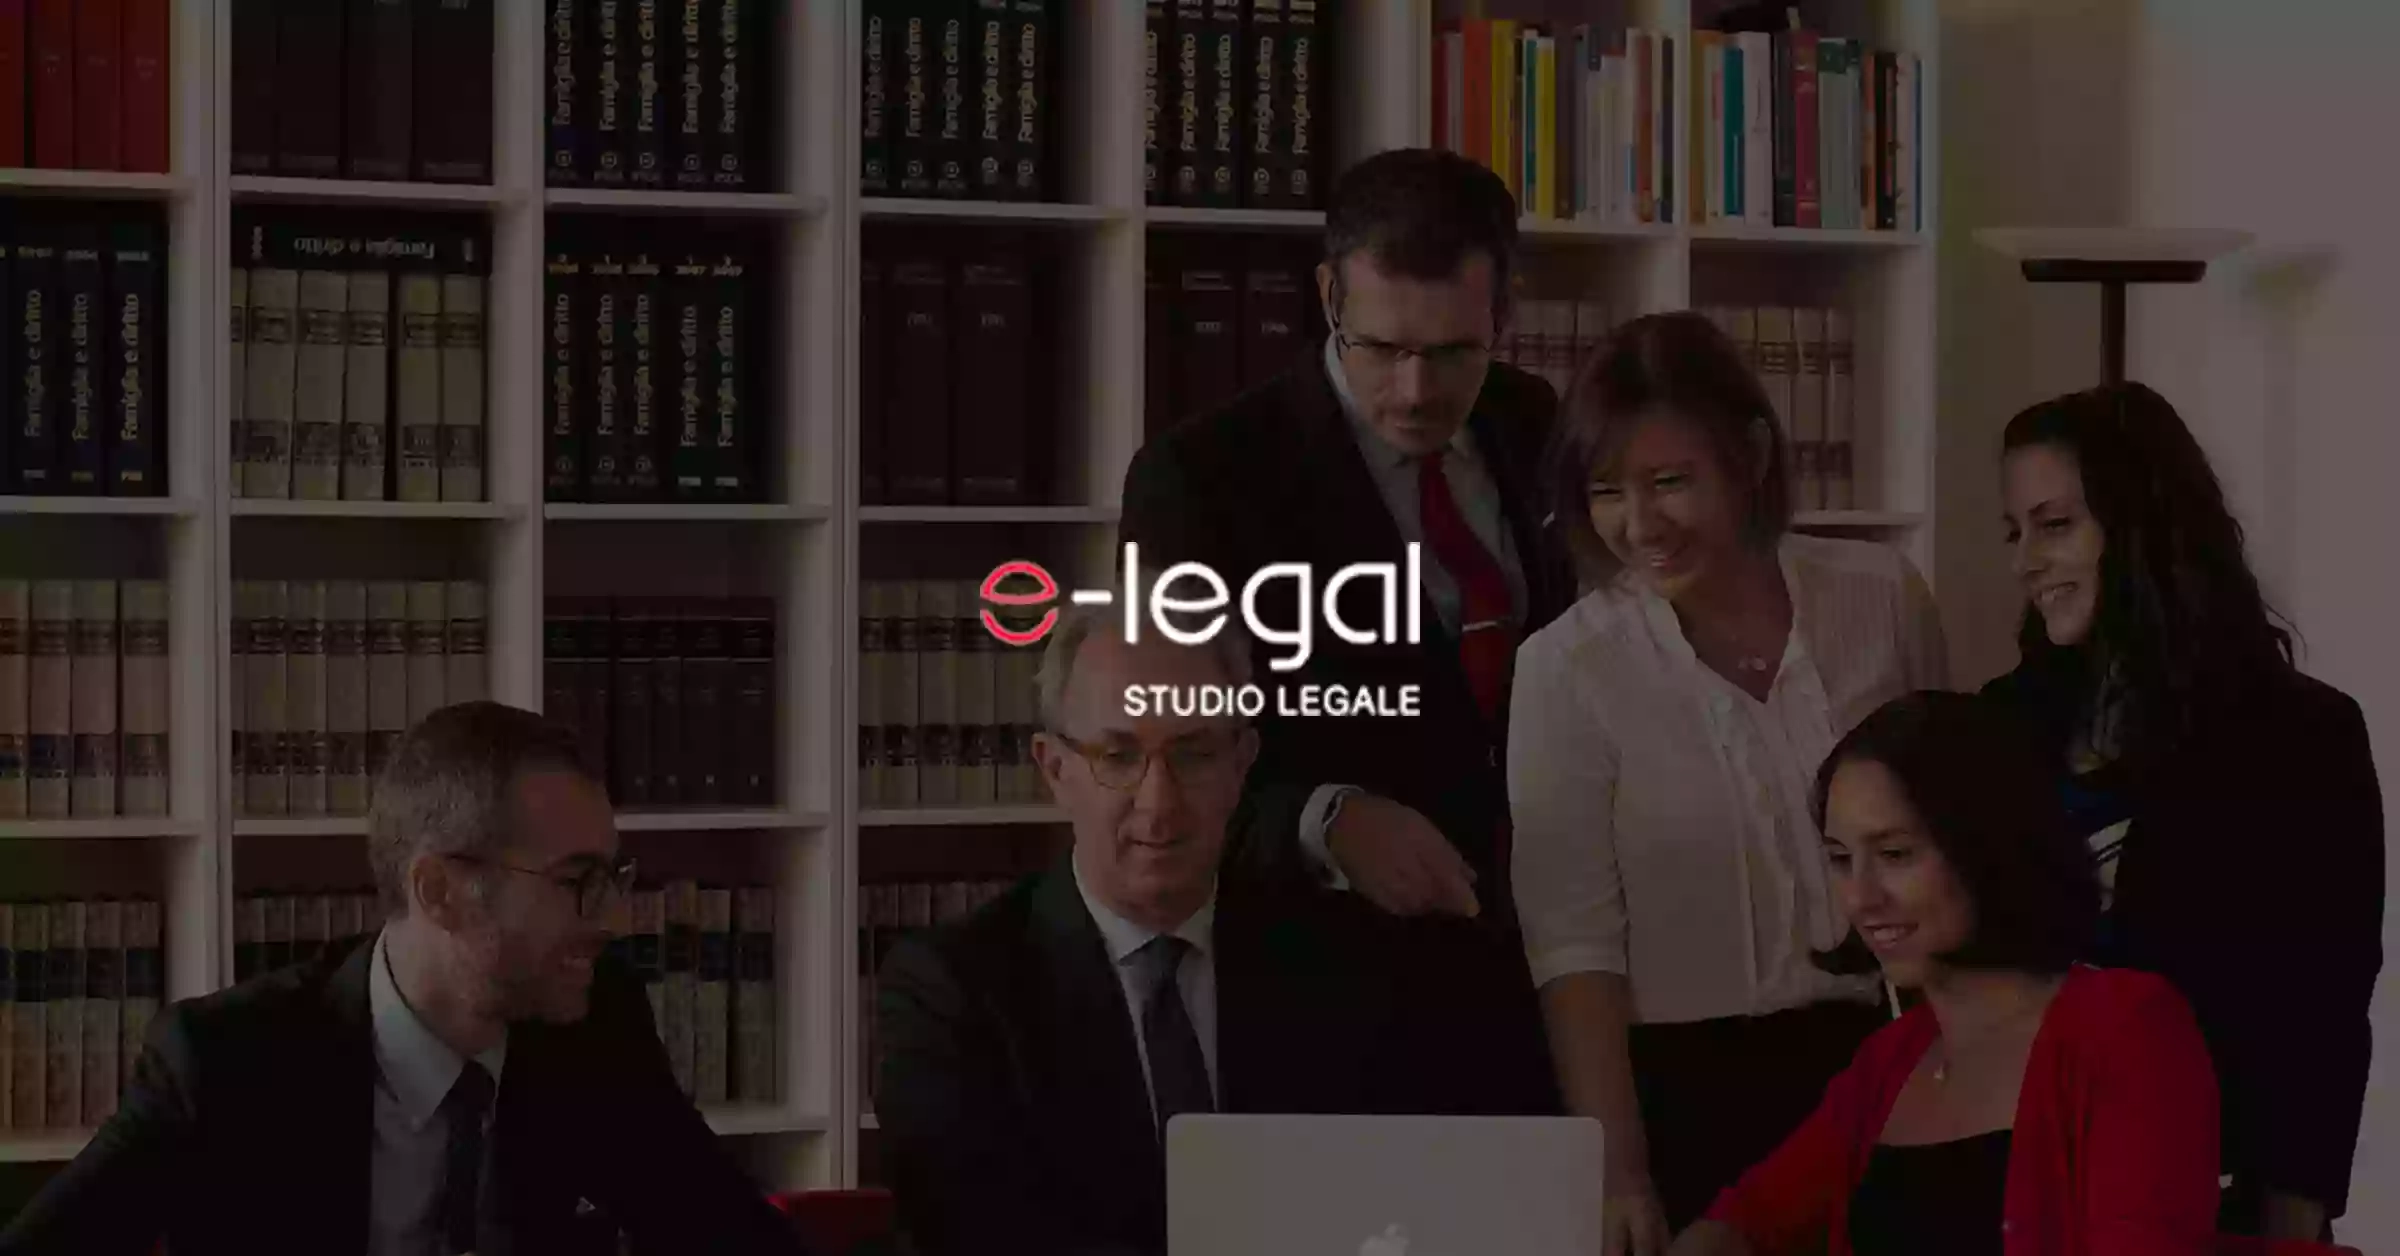 e-legal studio legale